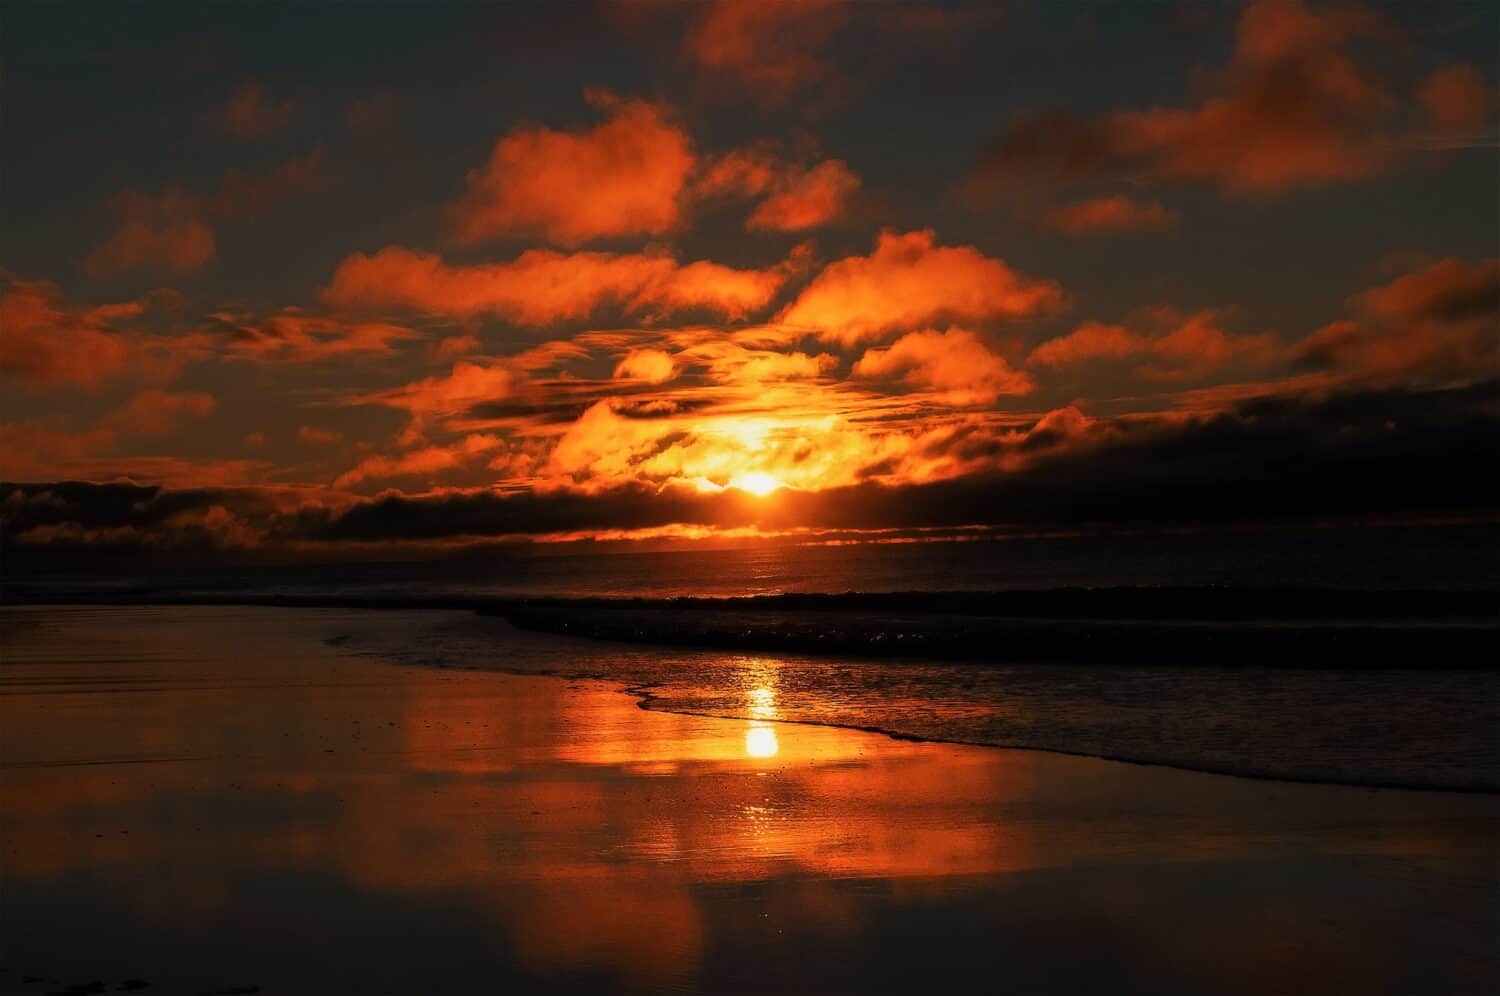 Sunrise shining through the clouds on Pine Knoll Shores, North Carolina